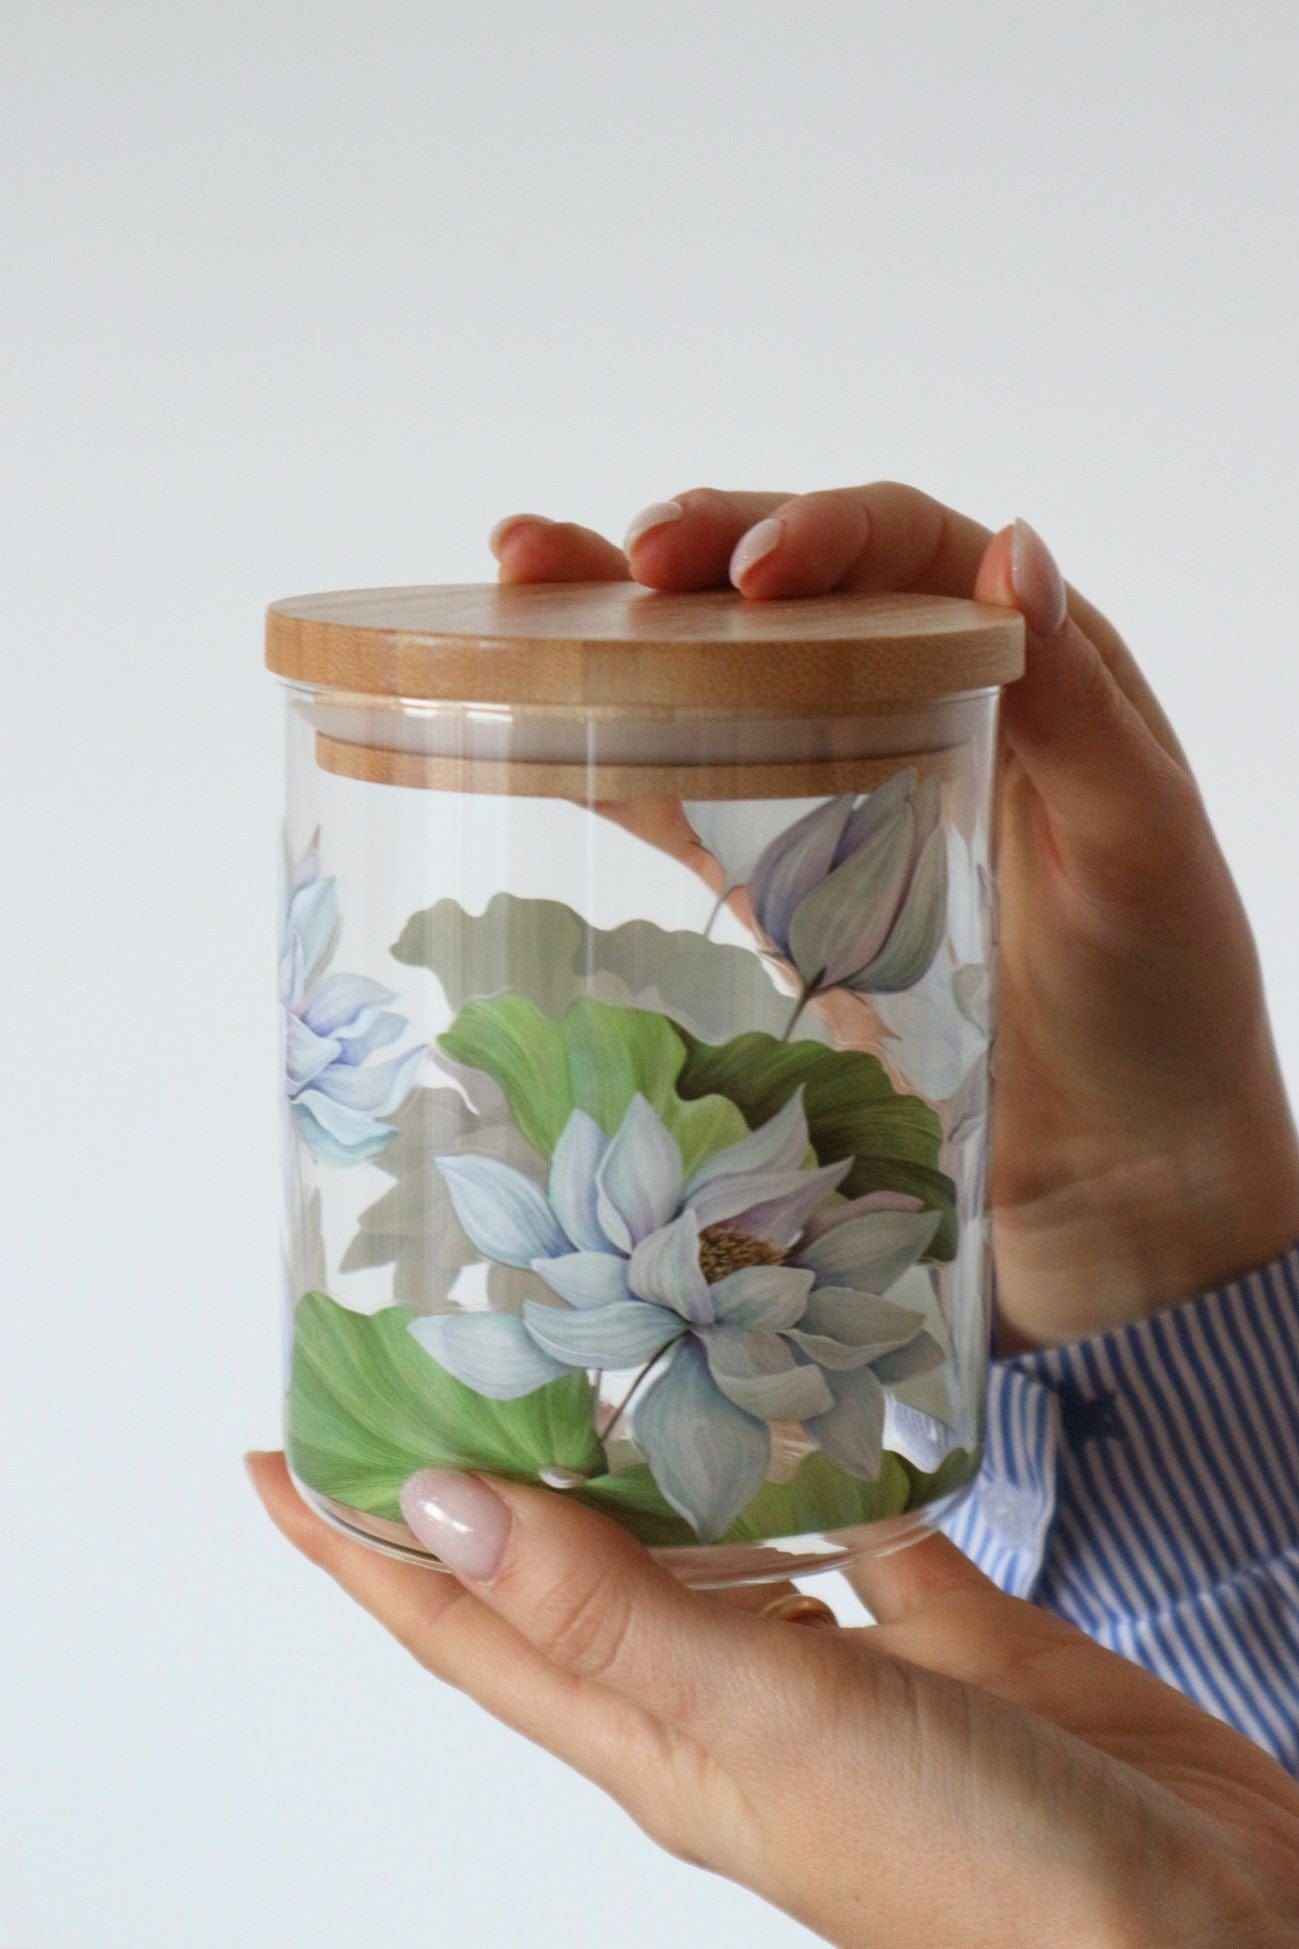 Item International Pitys Pitys - Barattolo in vetro borosilicato con ninfee e foglie | Item International Basso